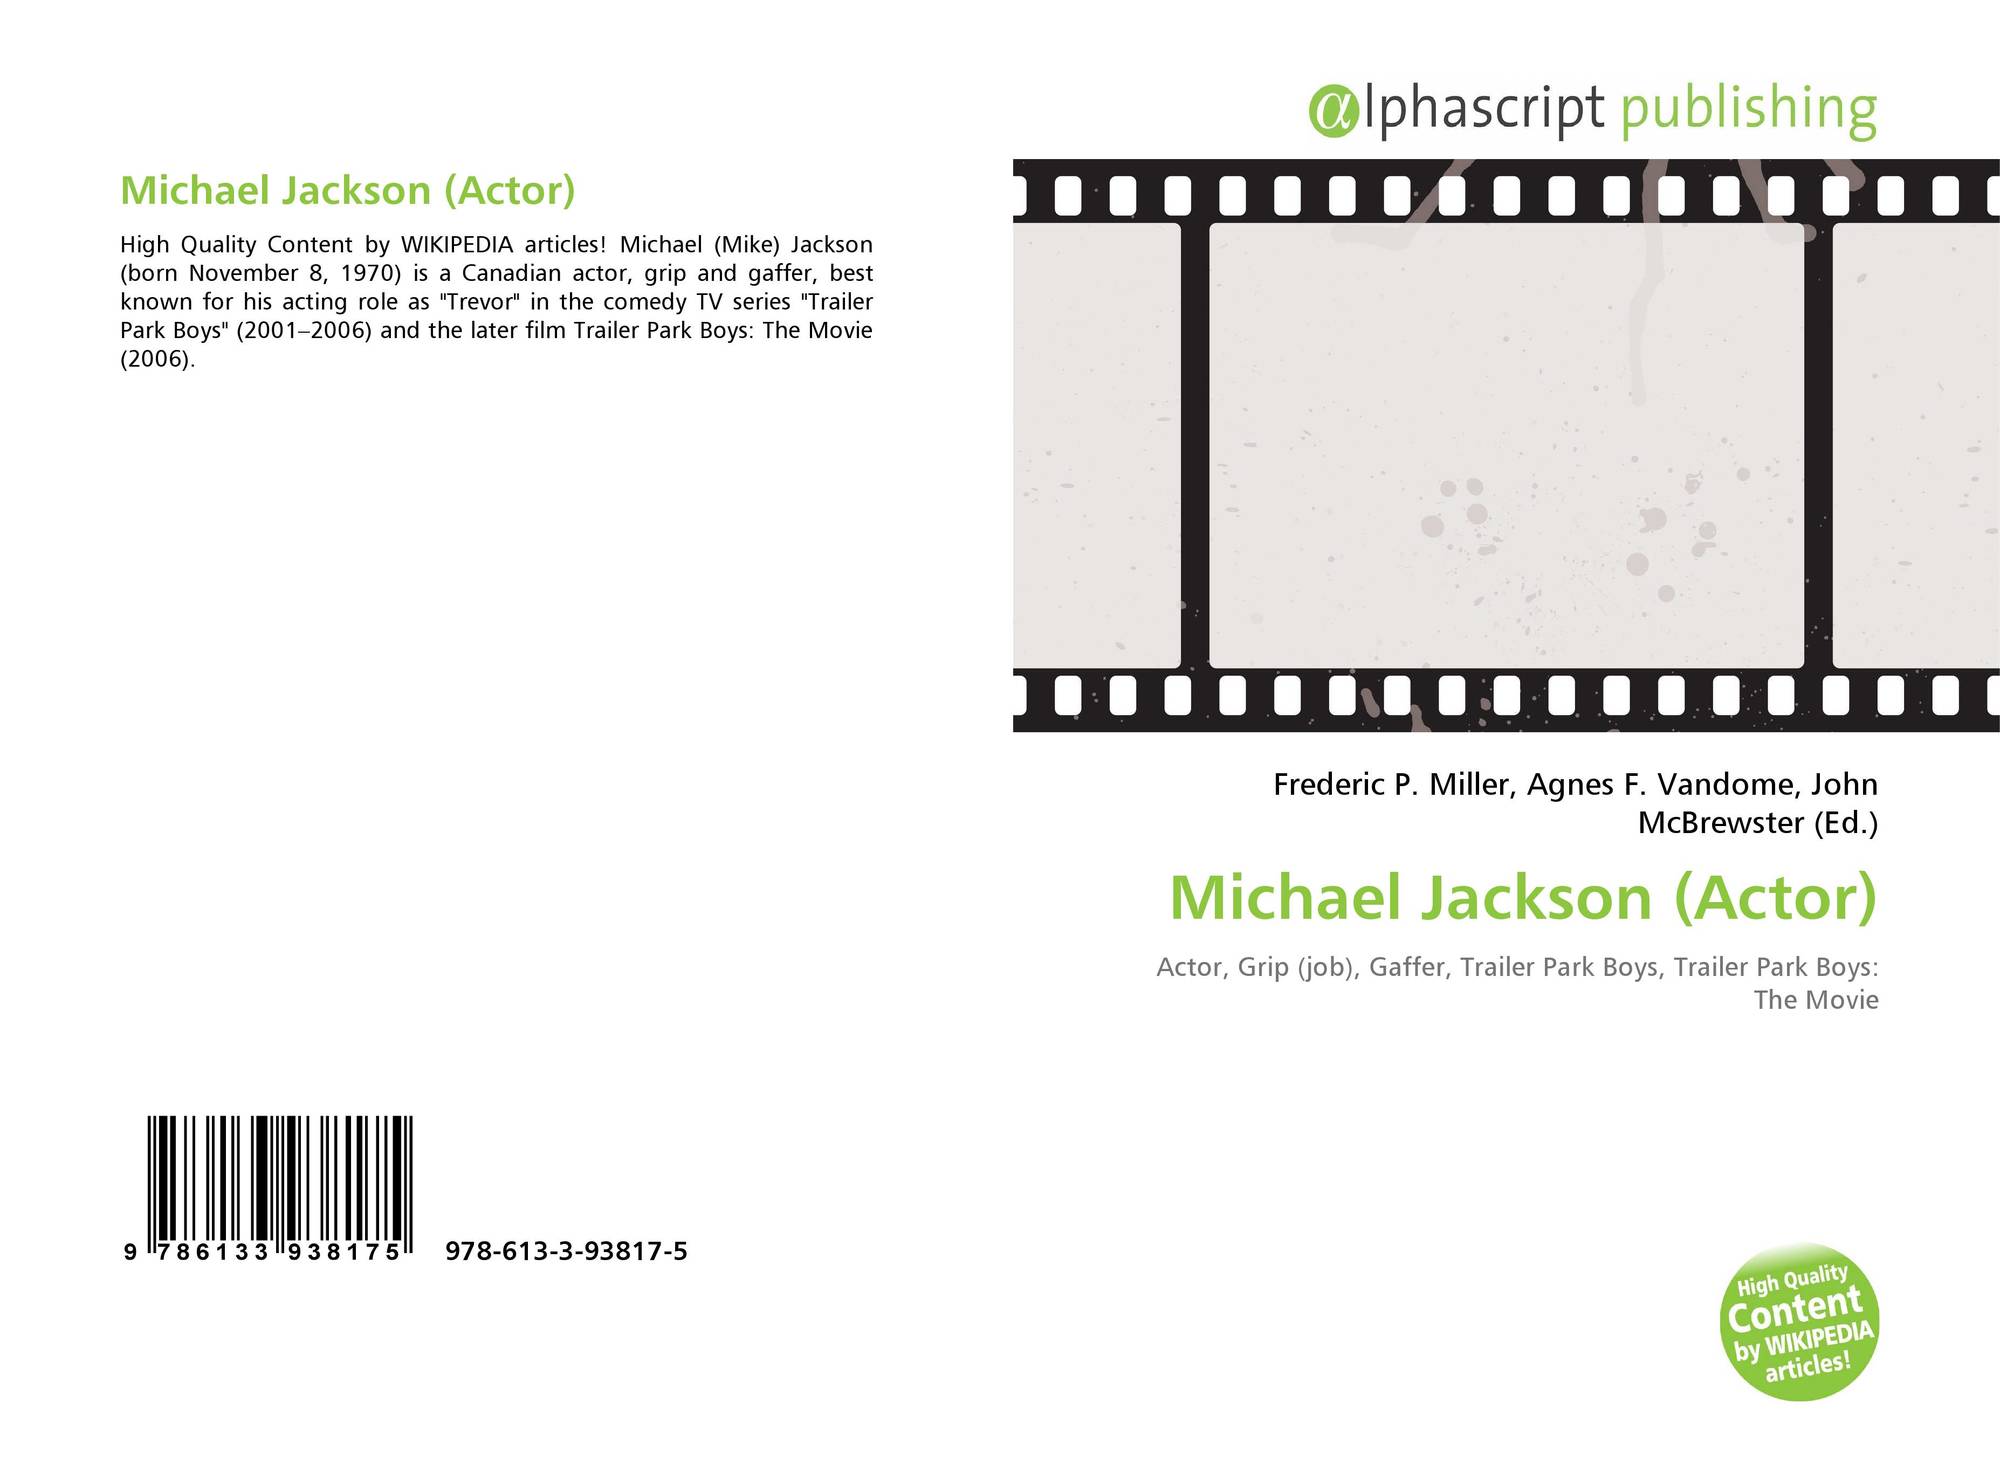 Michael Jackson Actor 978 613 3 5 x